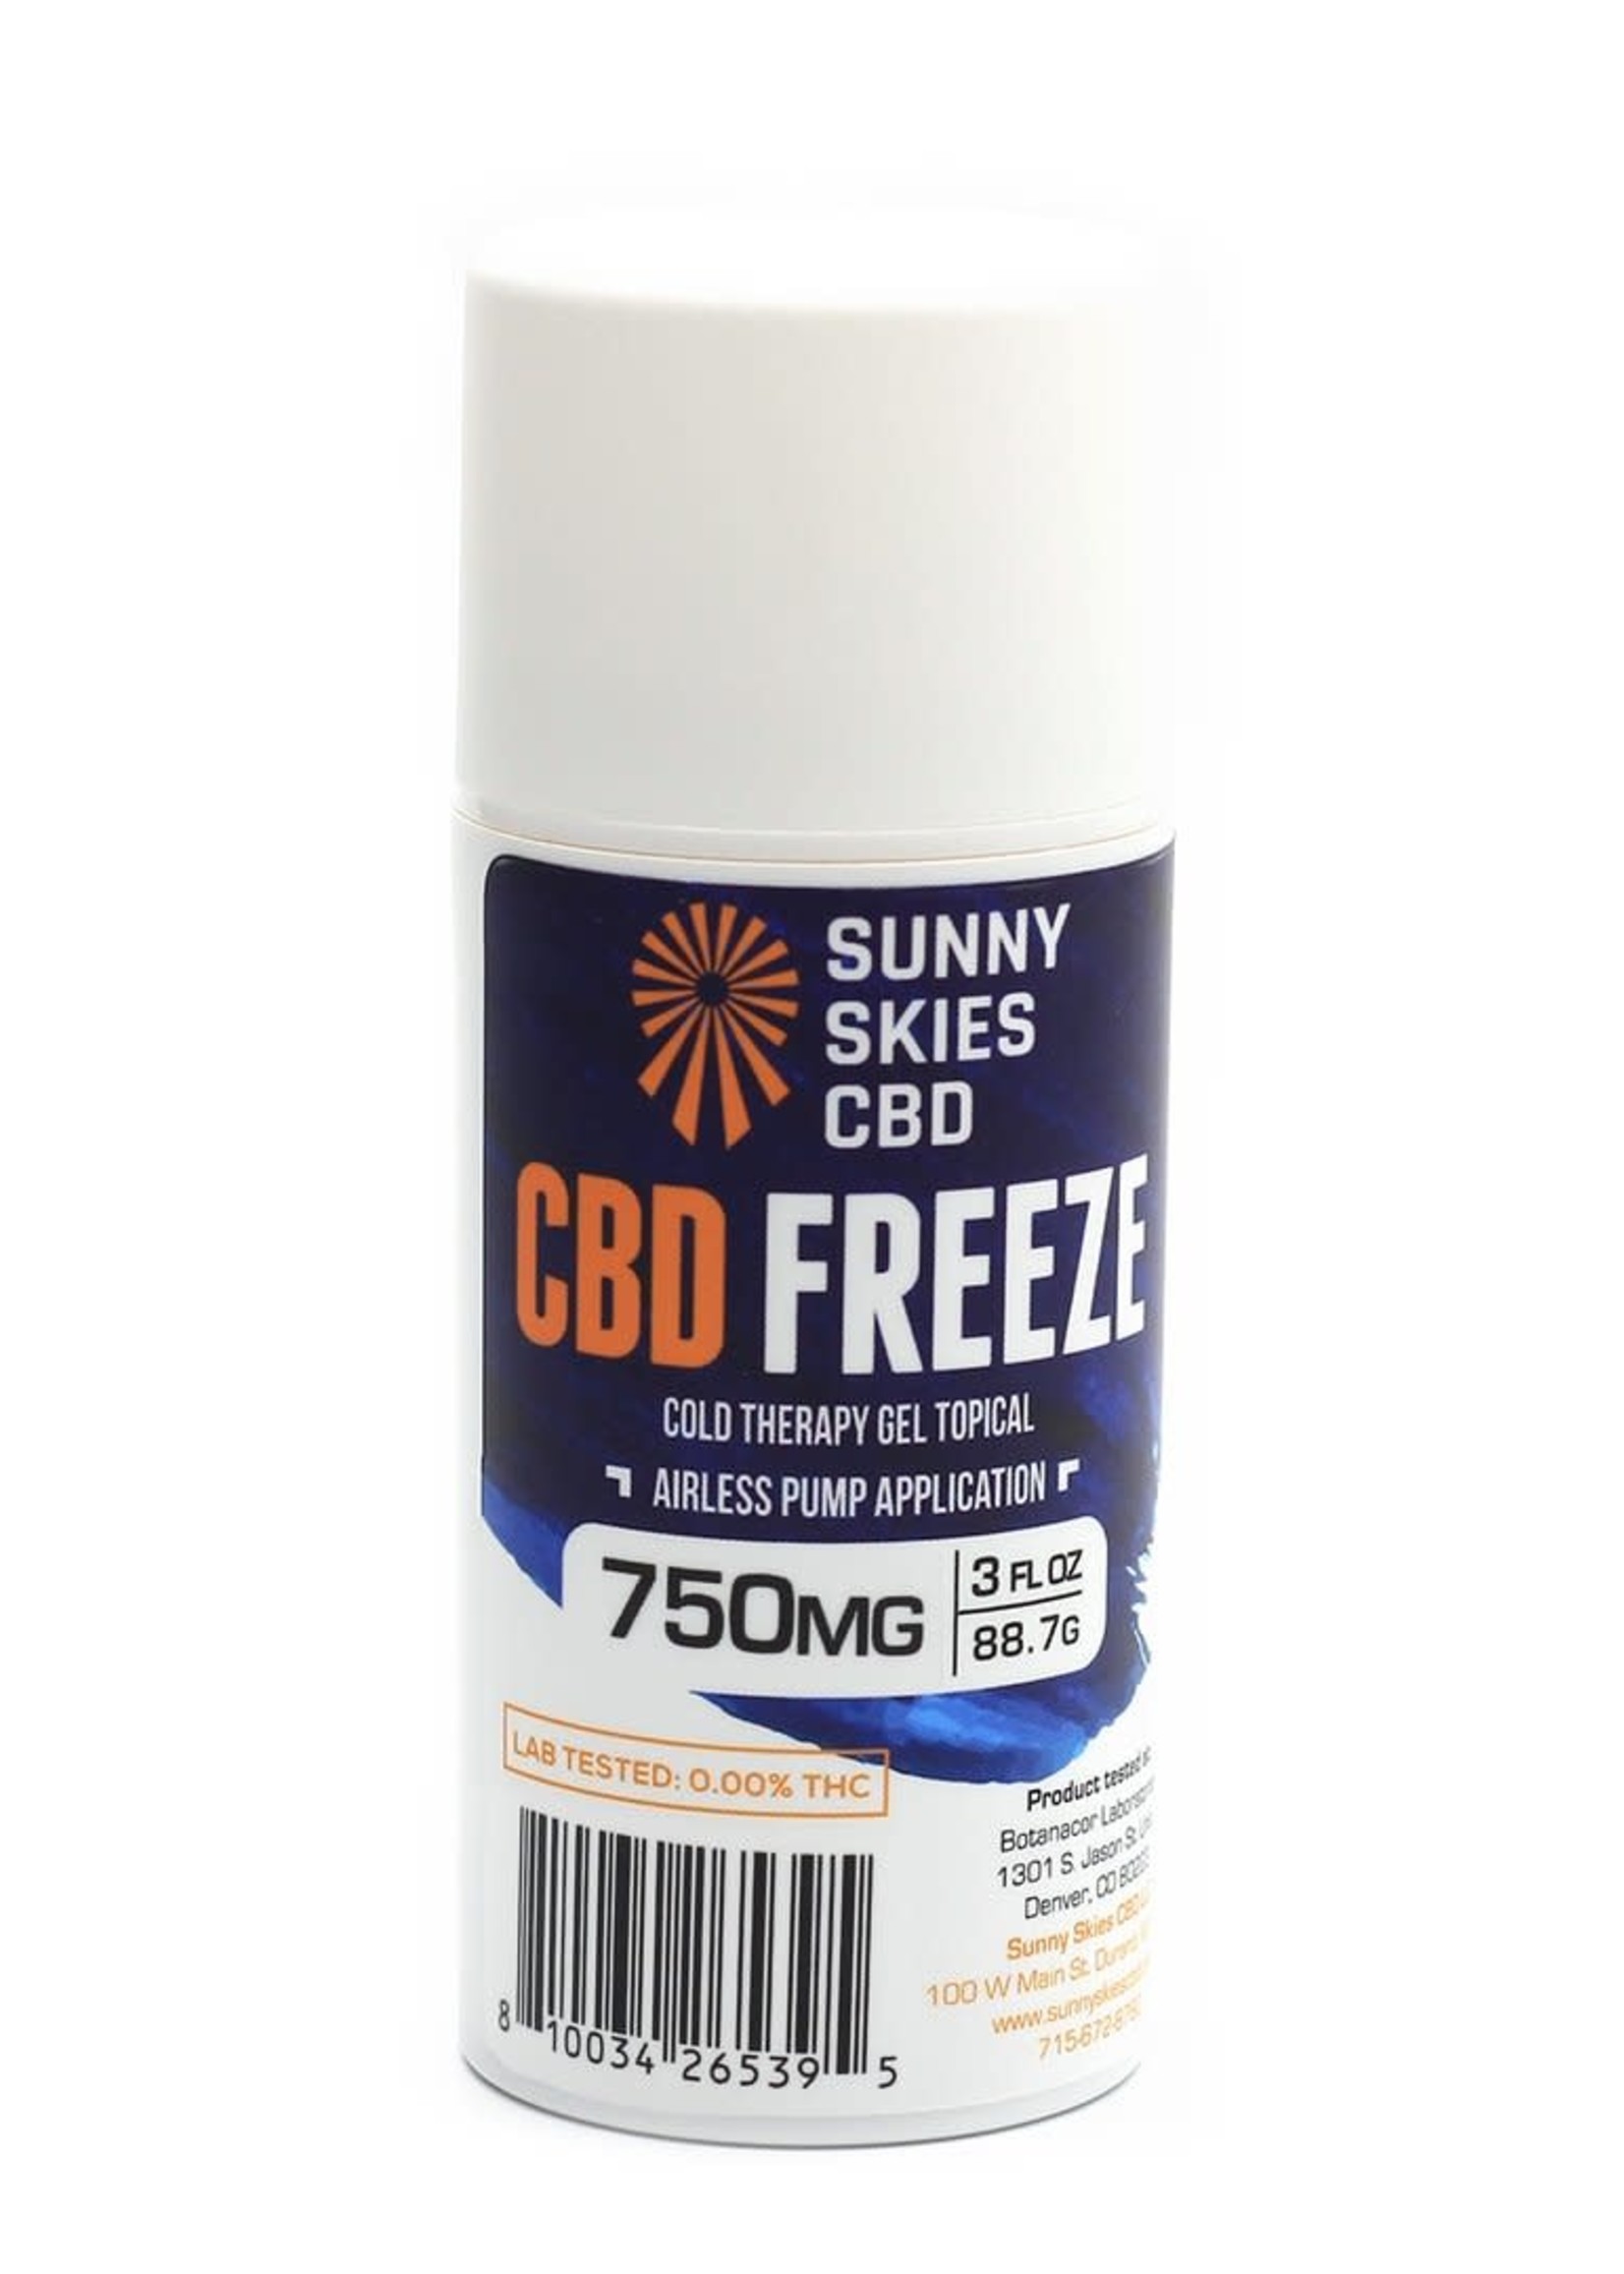 Sunny Skies CBD Freeze cream